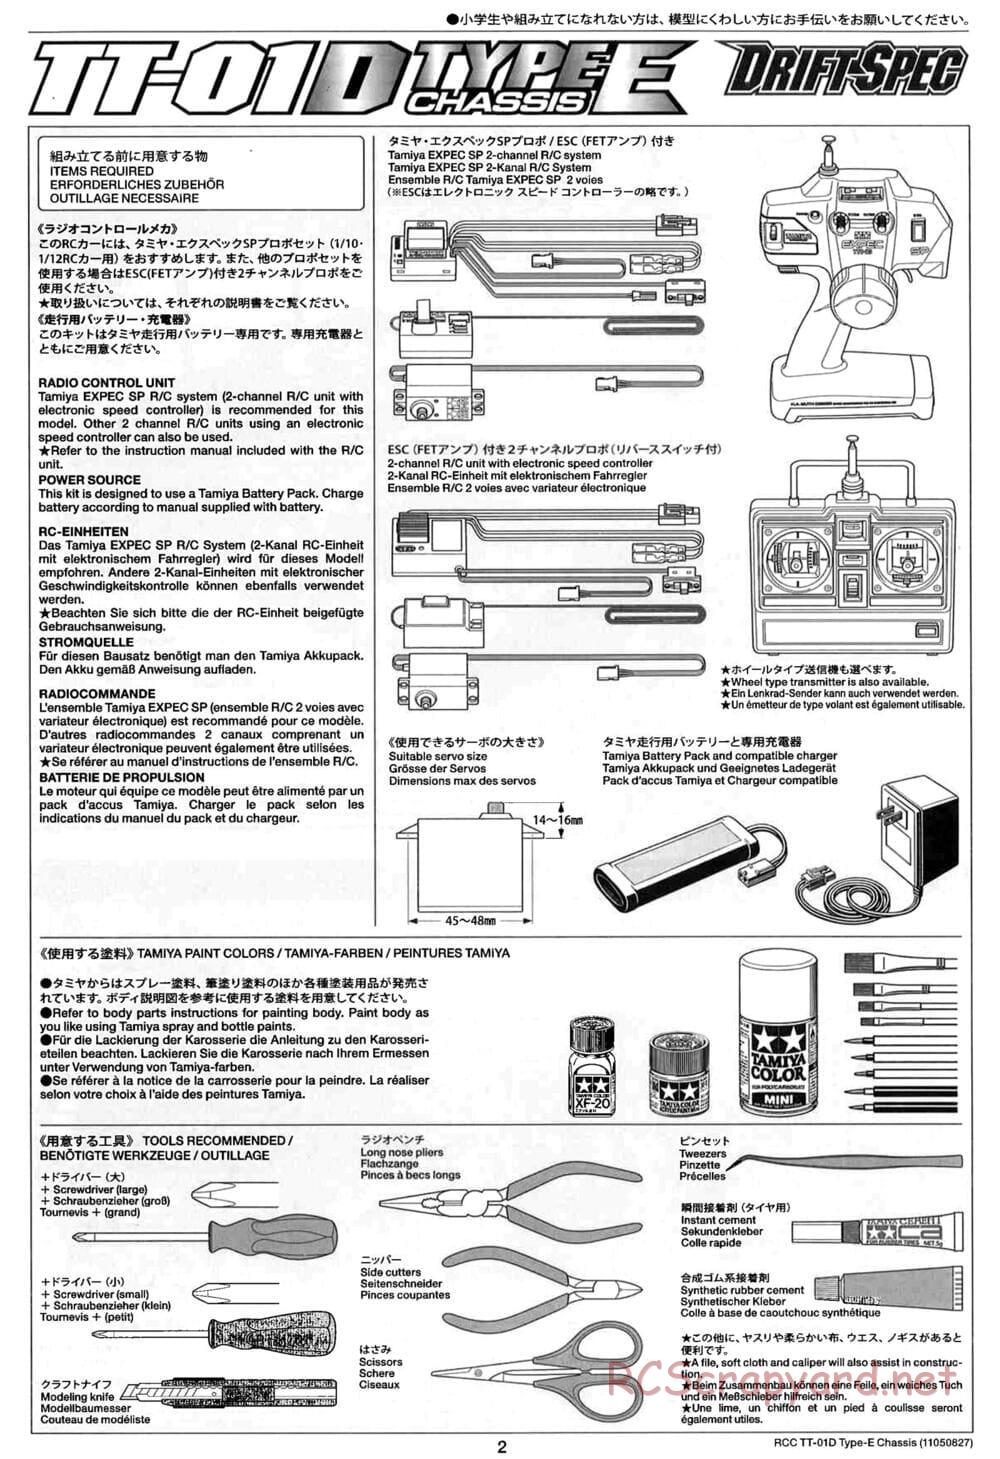 Tamiya - TT-01D Type-E (TT-01ED) - Drift Spec Chassis - Manual - Page 2